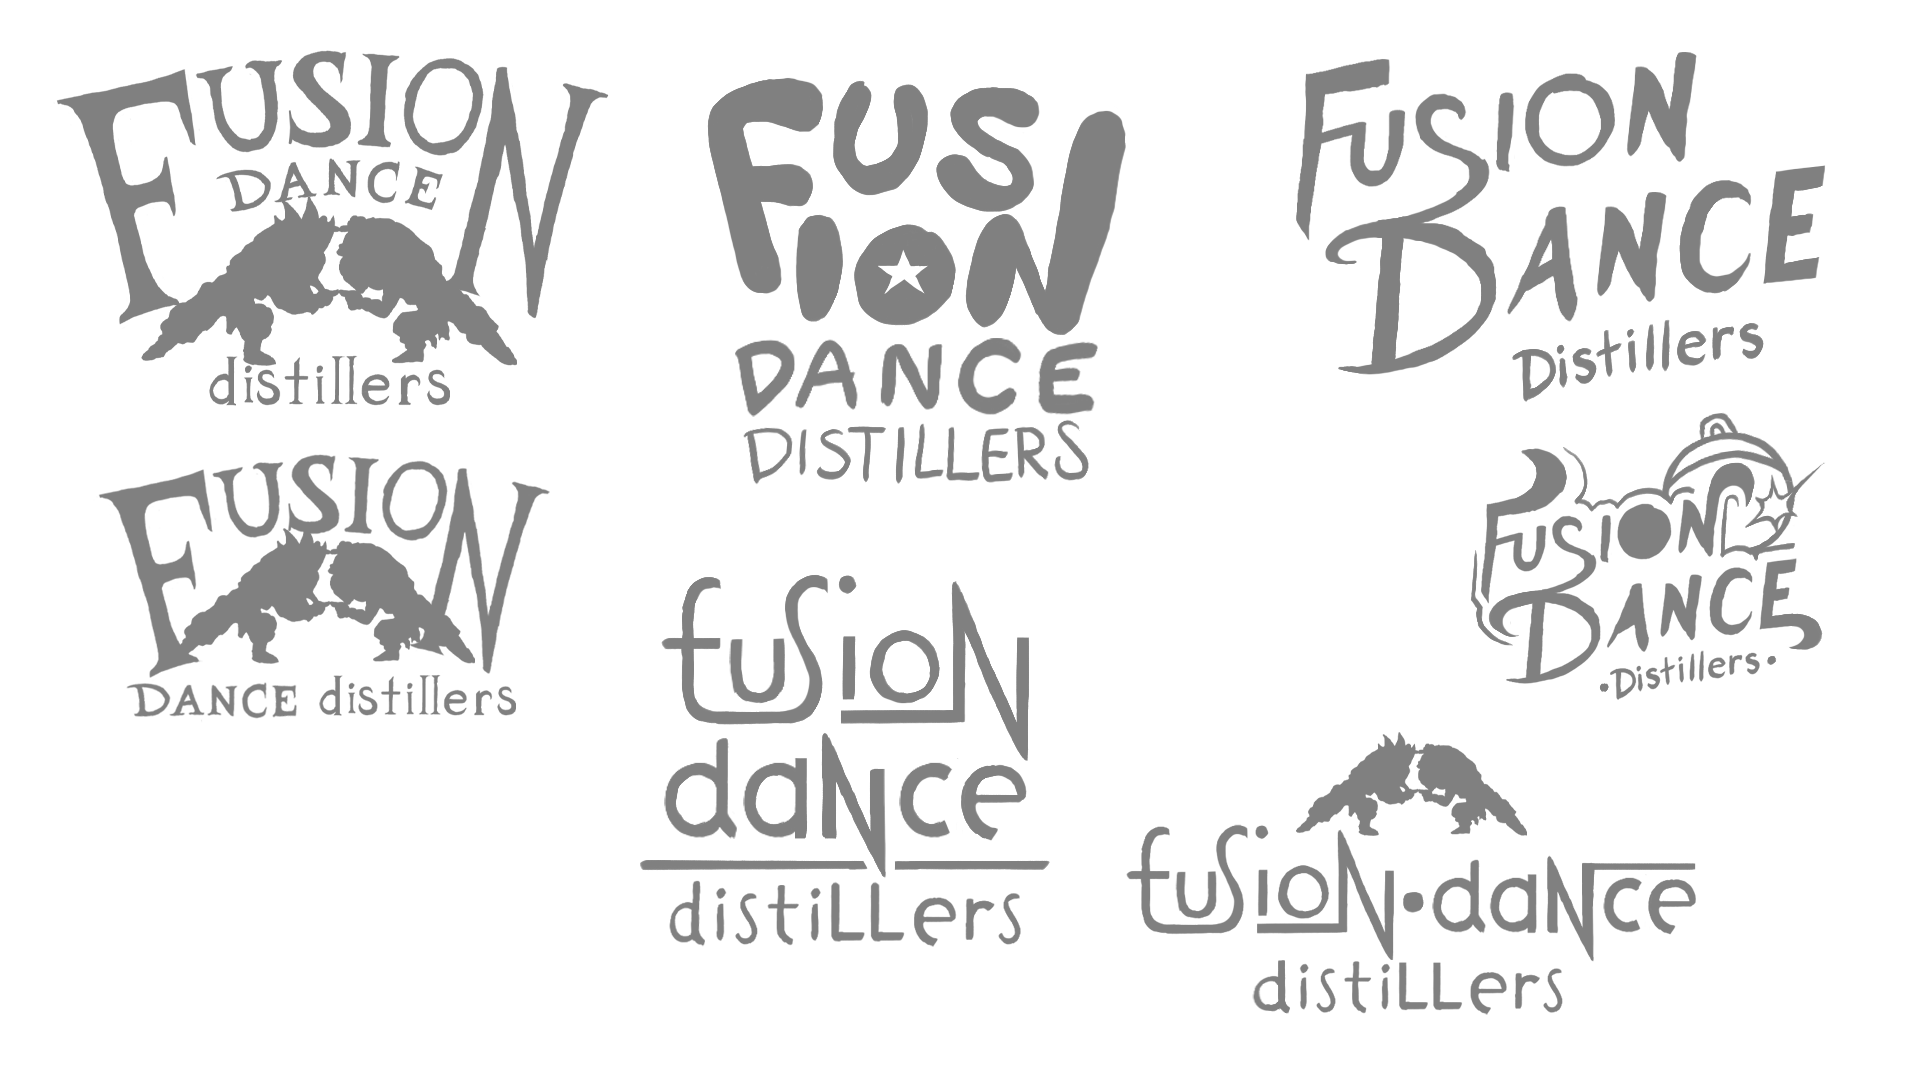 Fusion Dance Distillers logo sketch